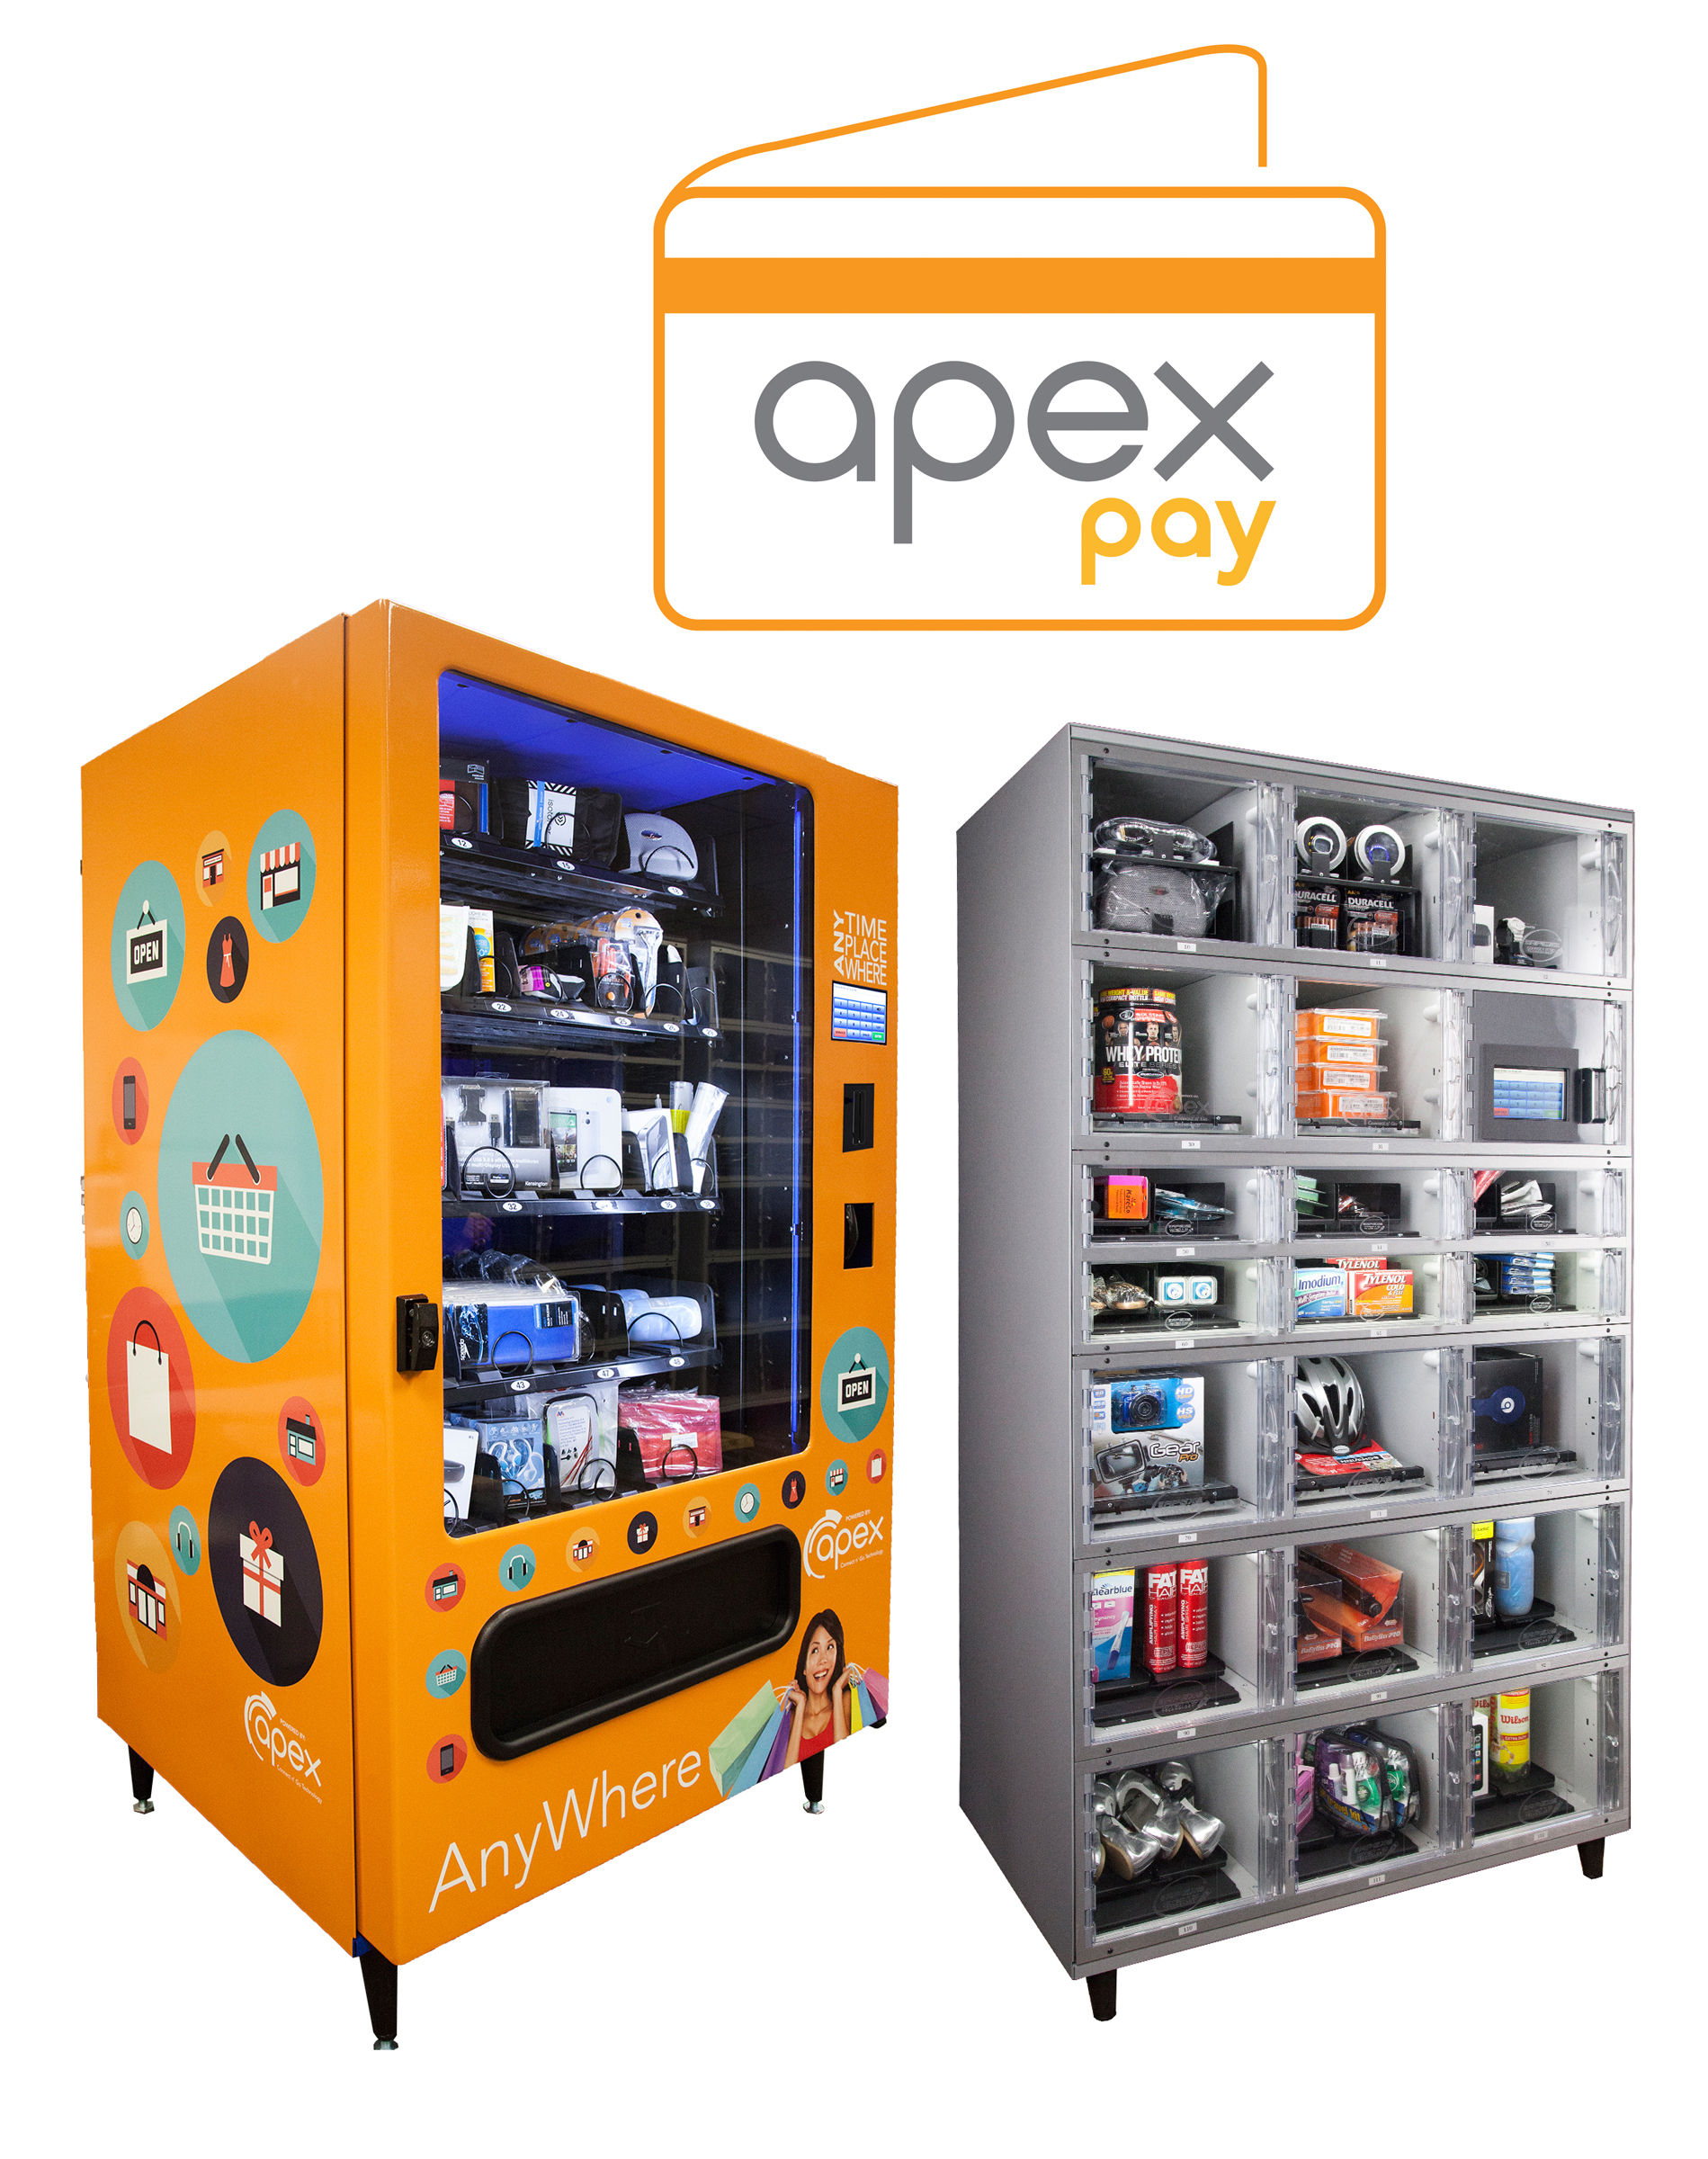 Full Service Vending Machine Solutions